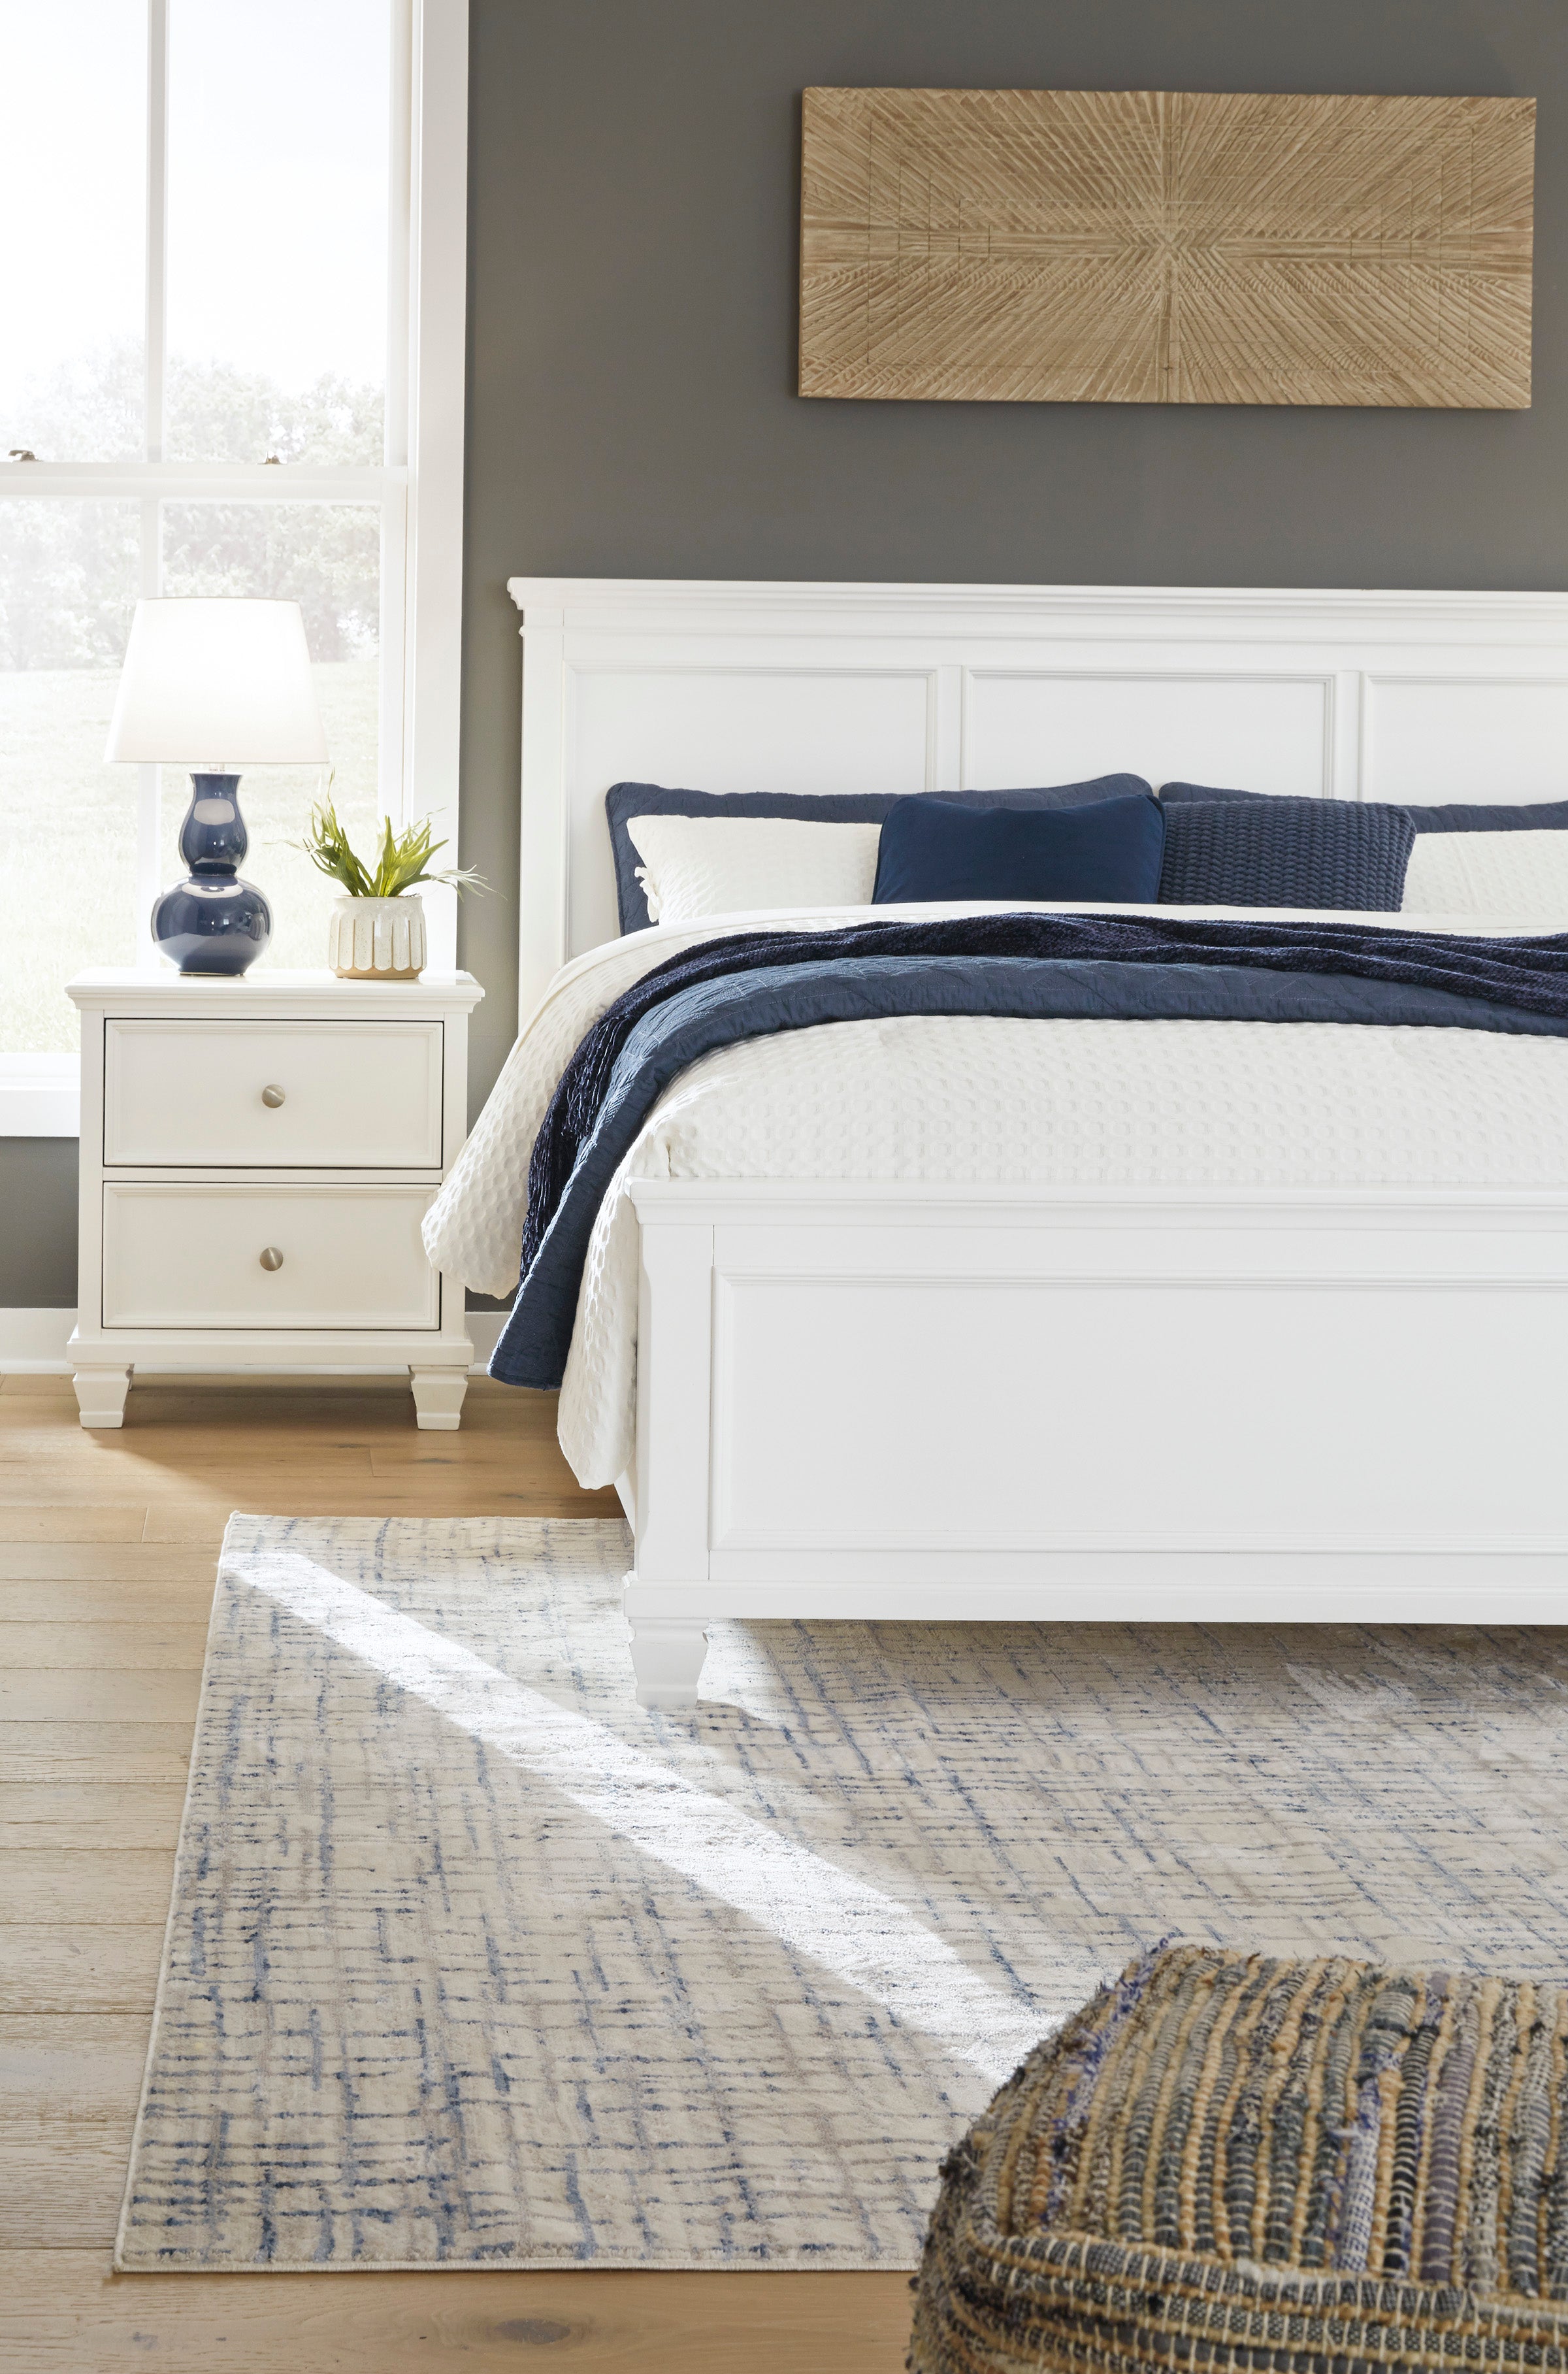 Fortman White Panel Youth Bedroom Set - SET | B680-84 | B680-86 | B680-87 | B680-31 | B680-36 - Bien Home Furniture &amp; Electronics